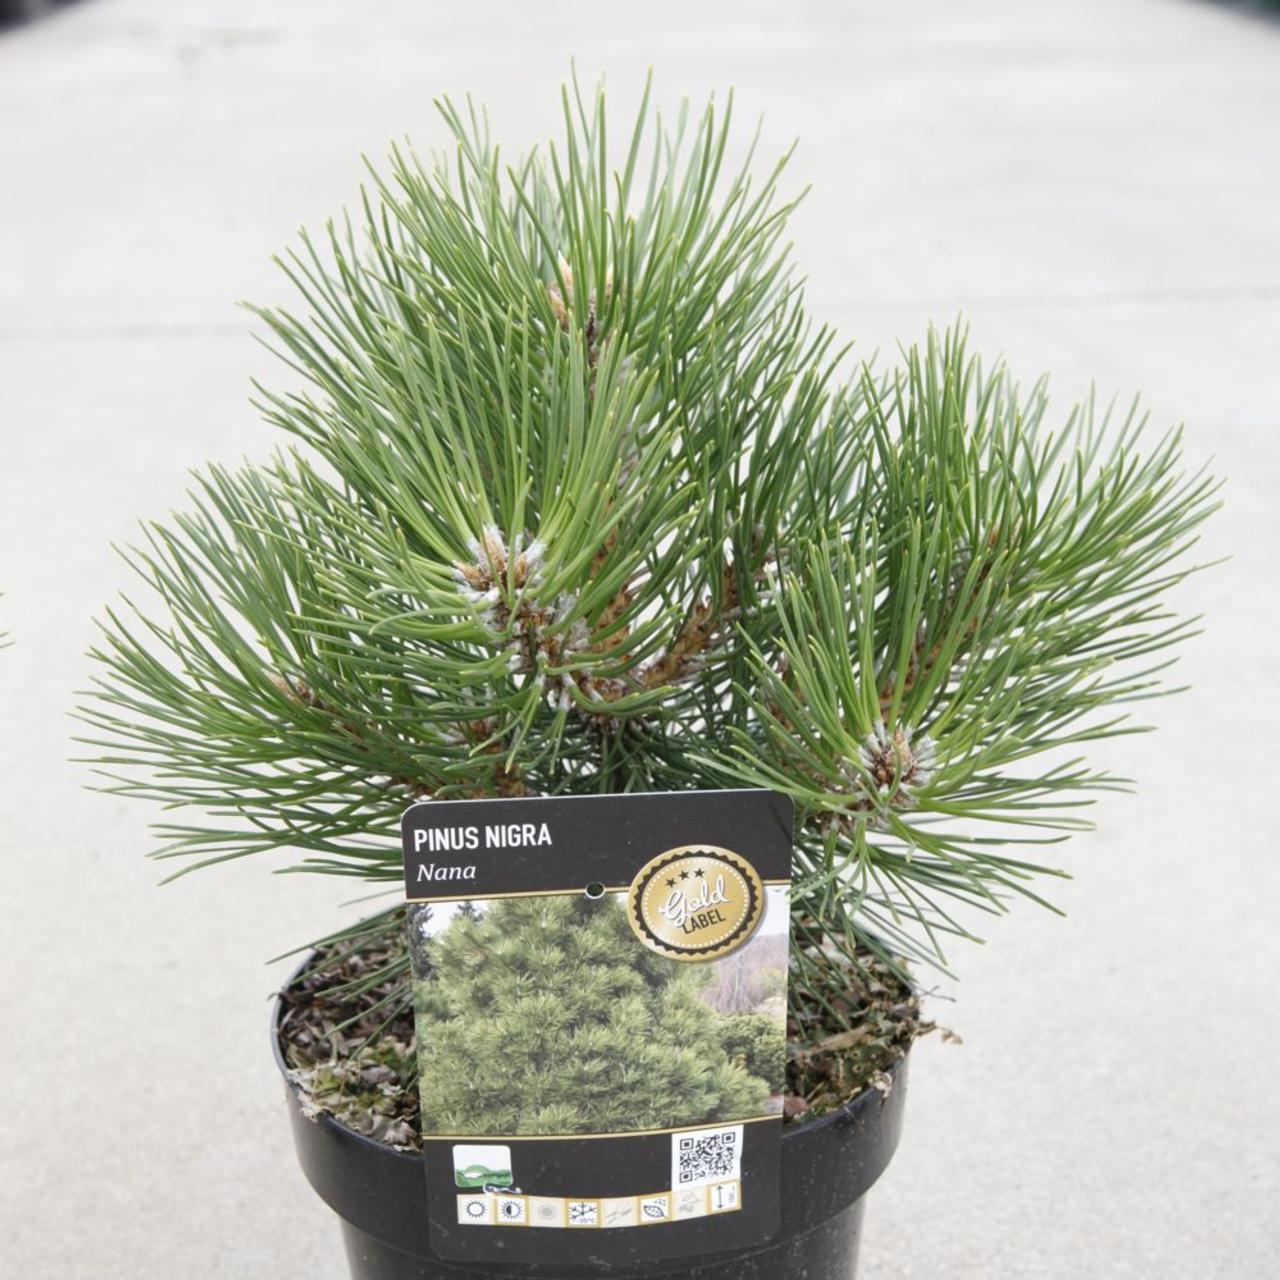 Pinus nigra 'Nana' plant